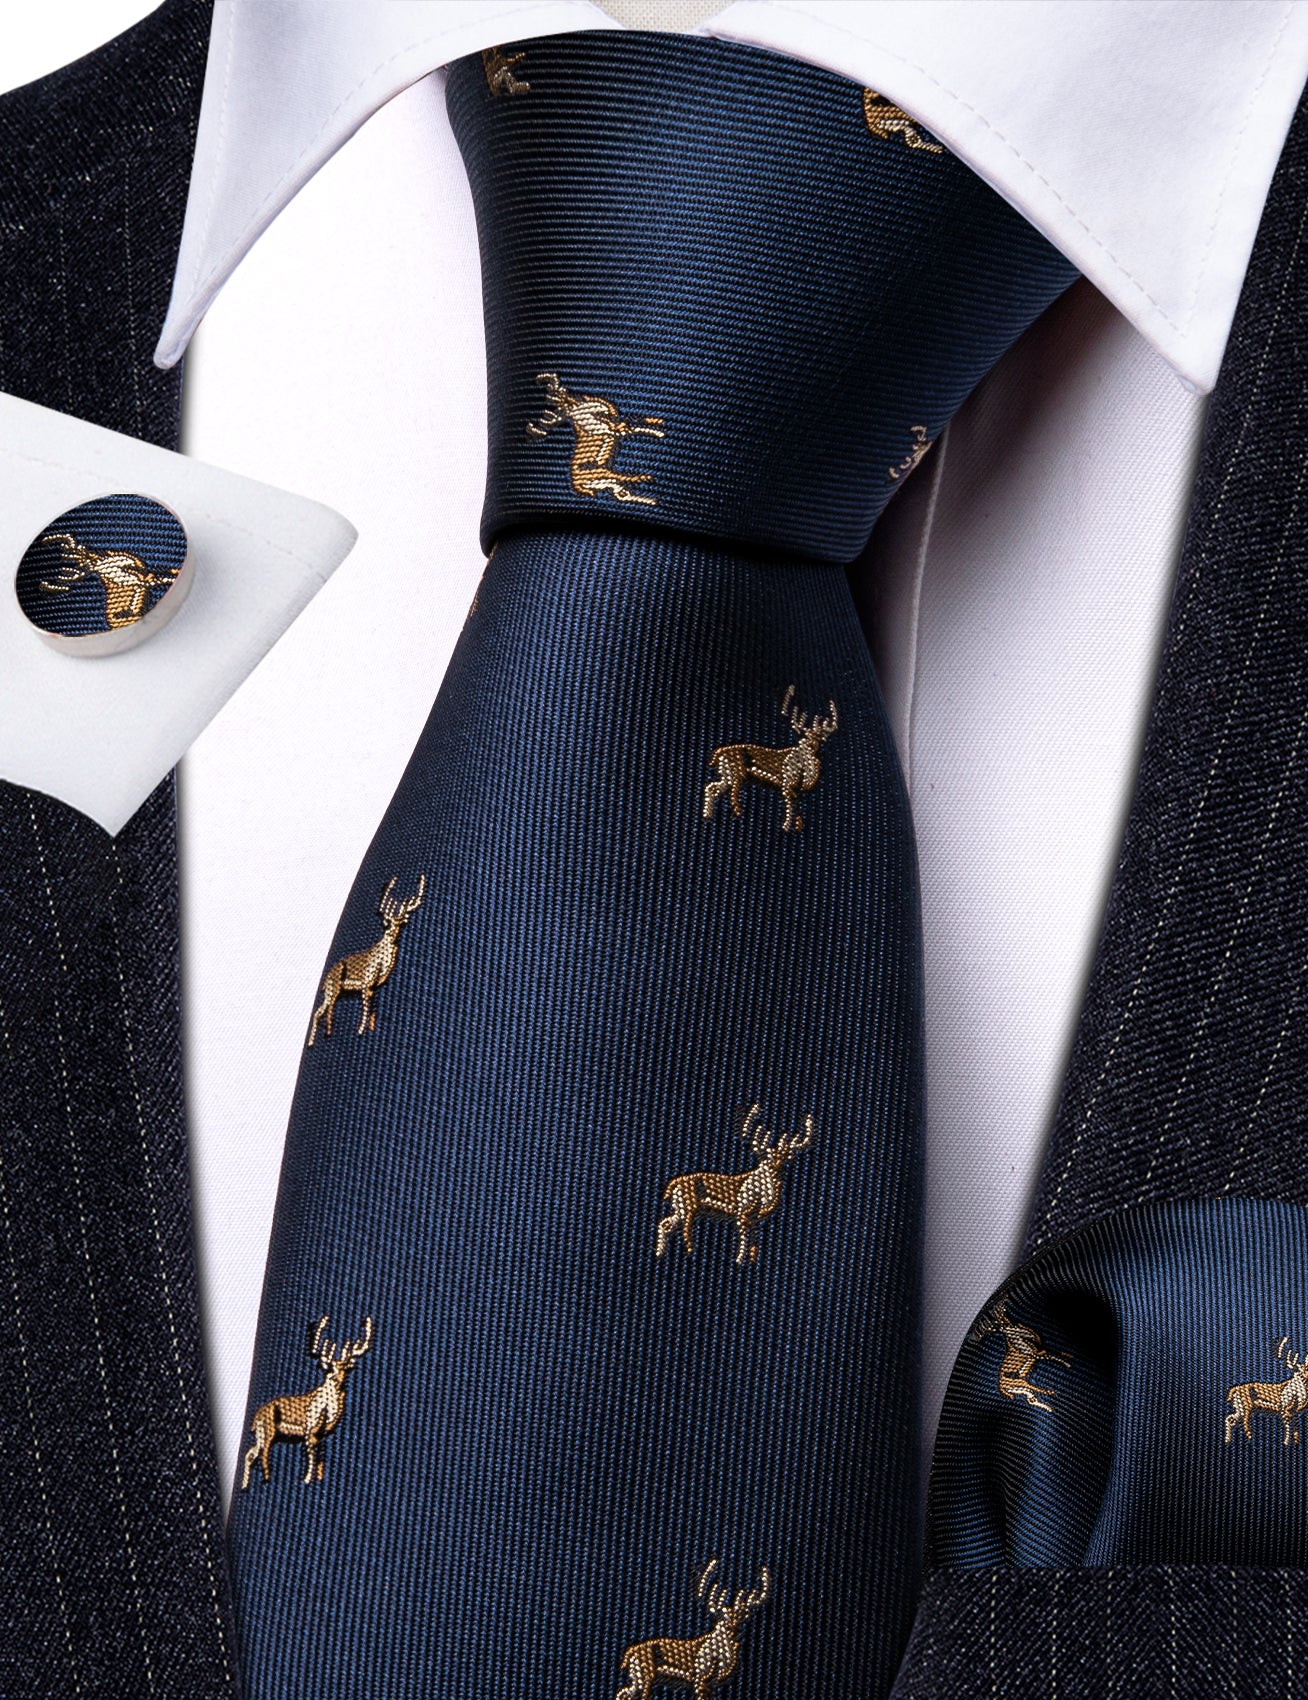 Deep Blue Deer Floral Silk Necktie Pocket Square Cufflinks Set